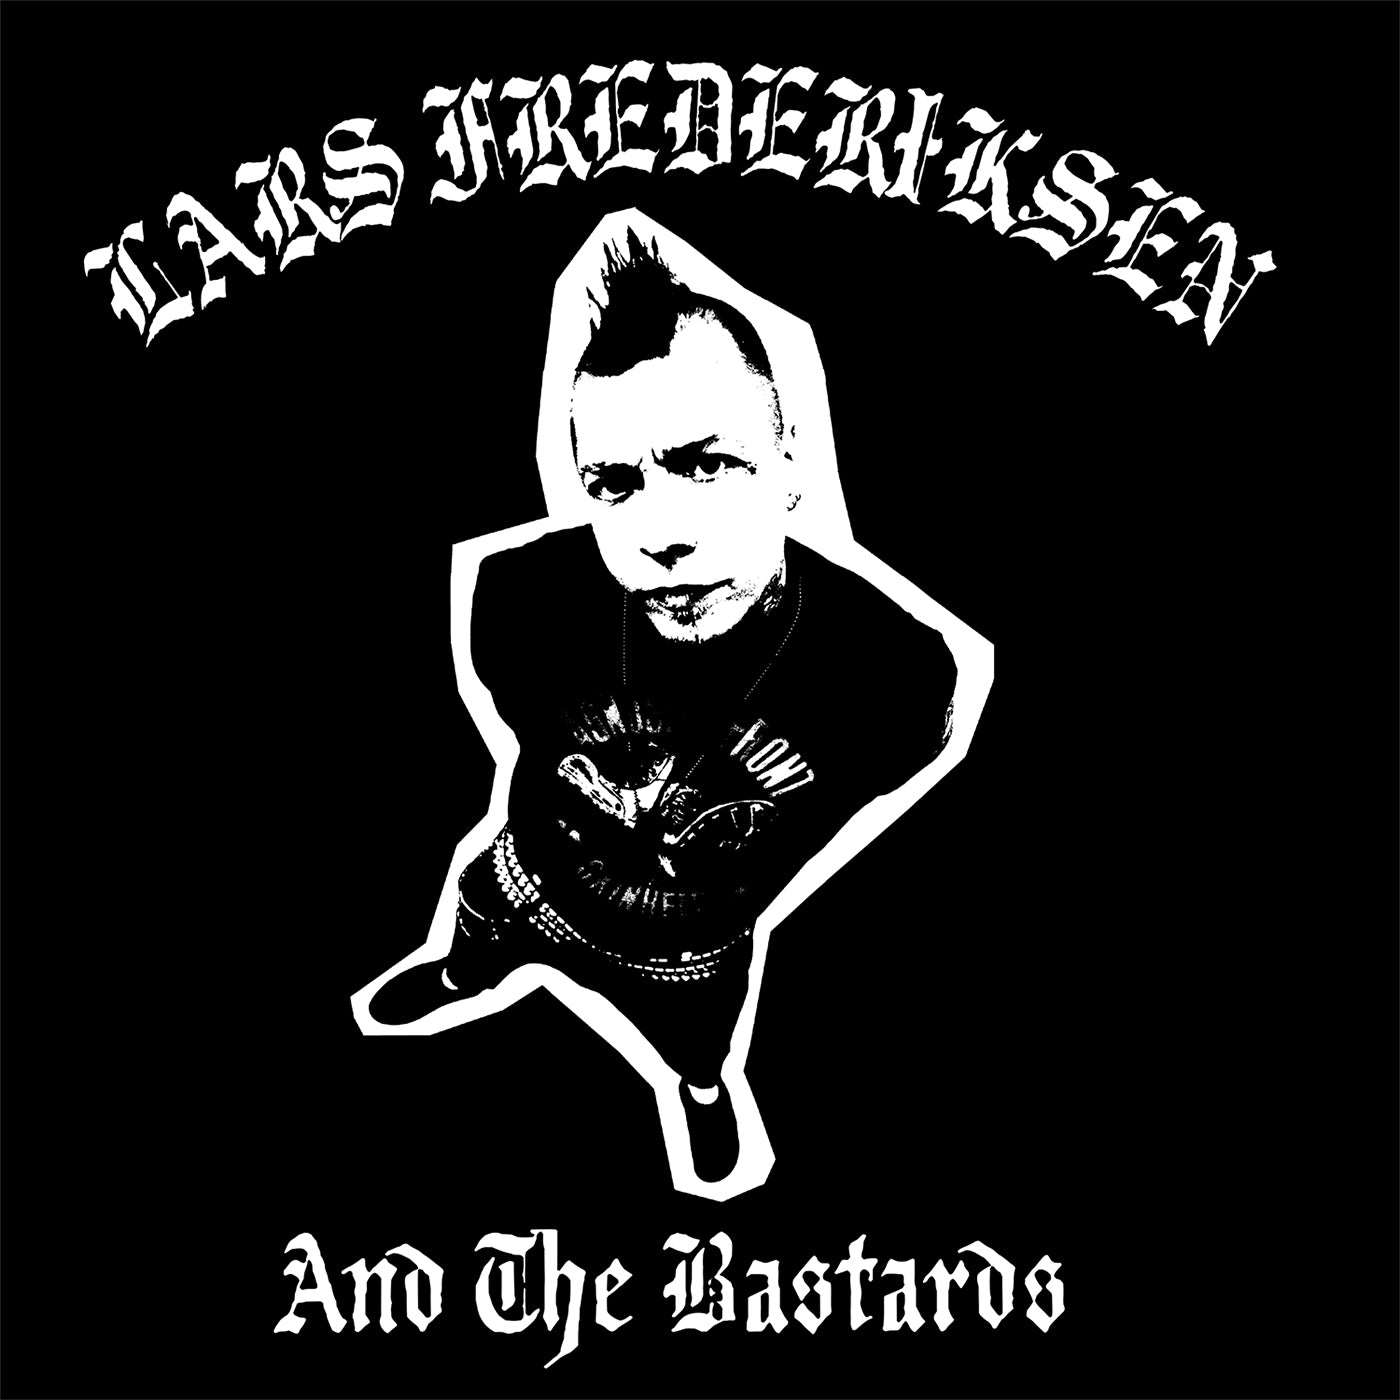 Lars Frederiksen & The Bastards - S/T - Bleach Marble - Vinyl LP